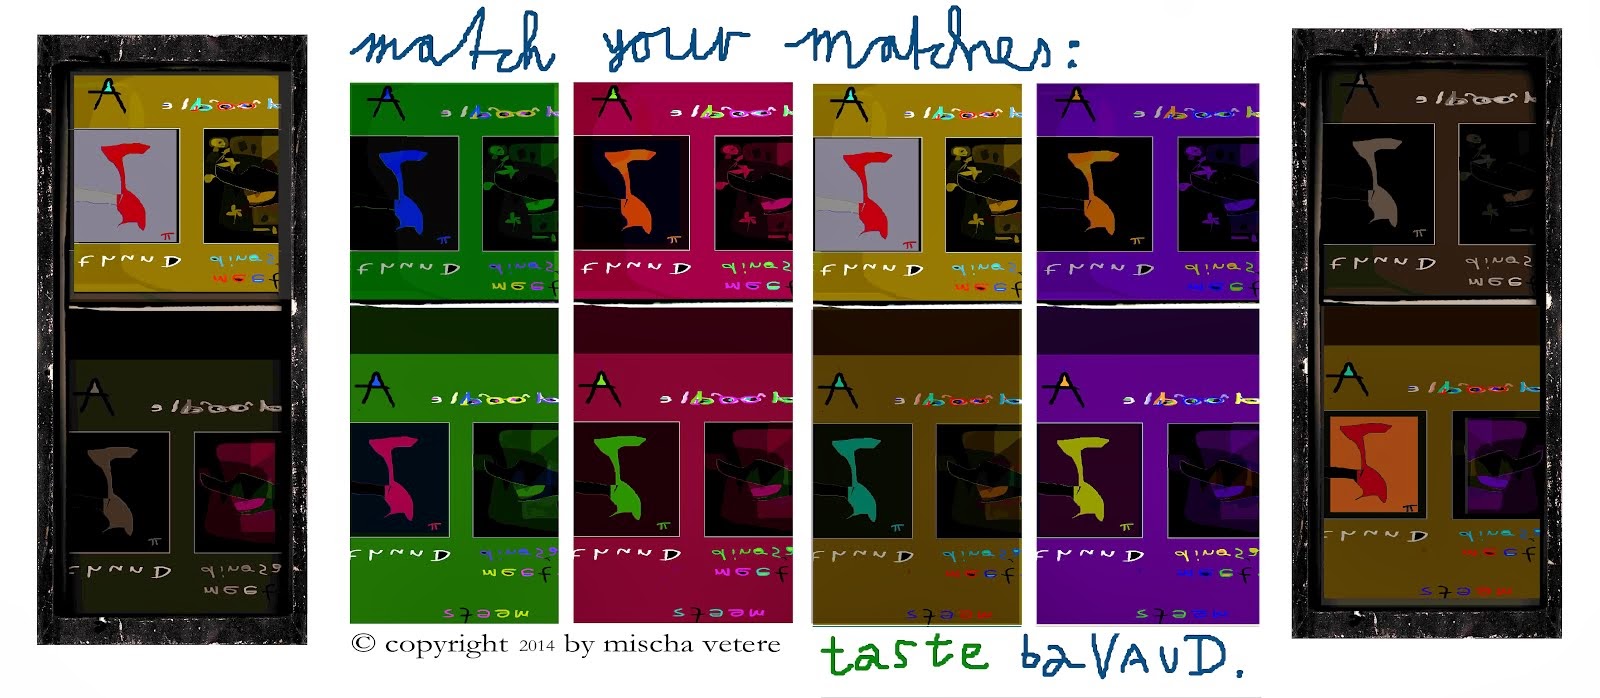 mani matter - hommage mischa vetere MATCHES, creativity painting school mvART4u - the new visiON